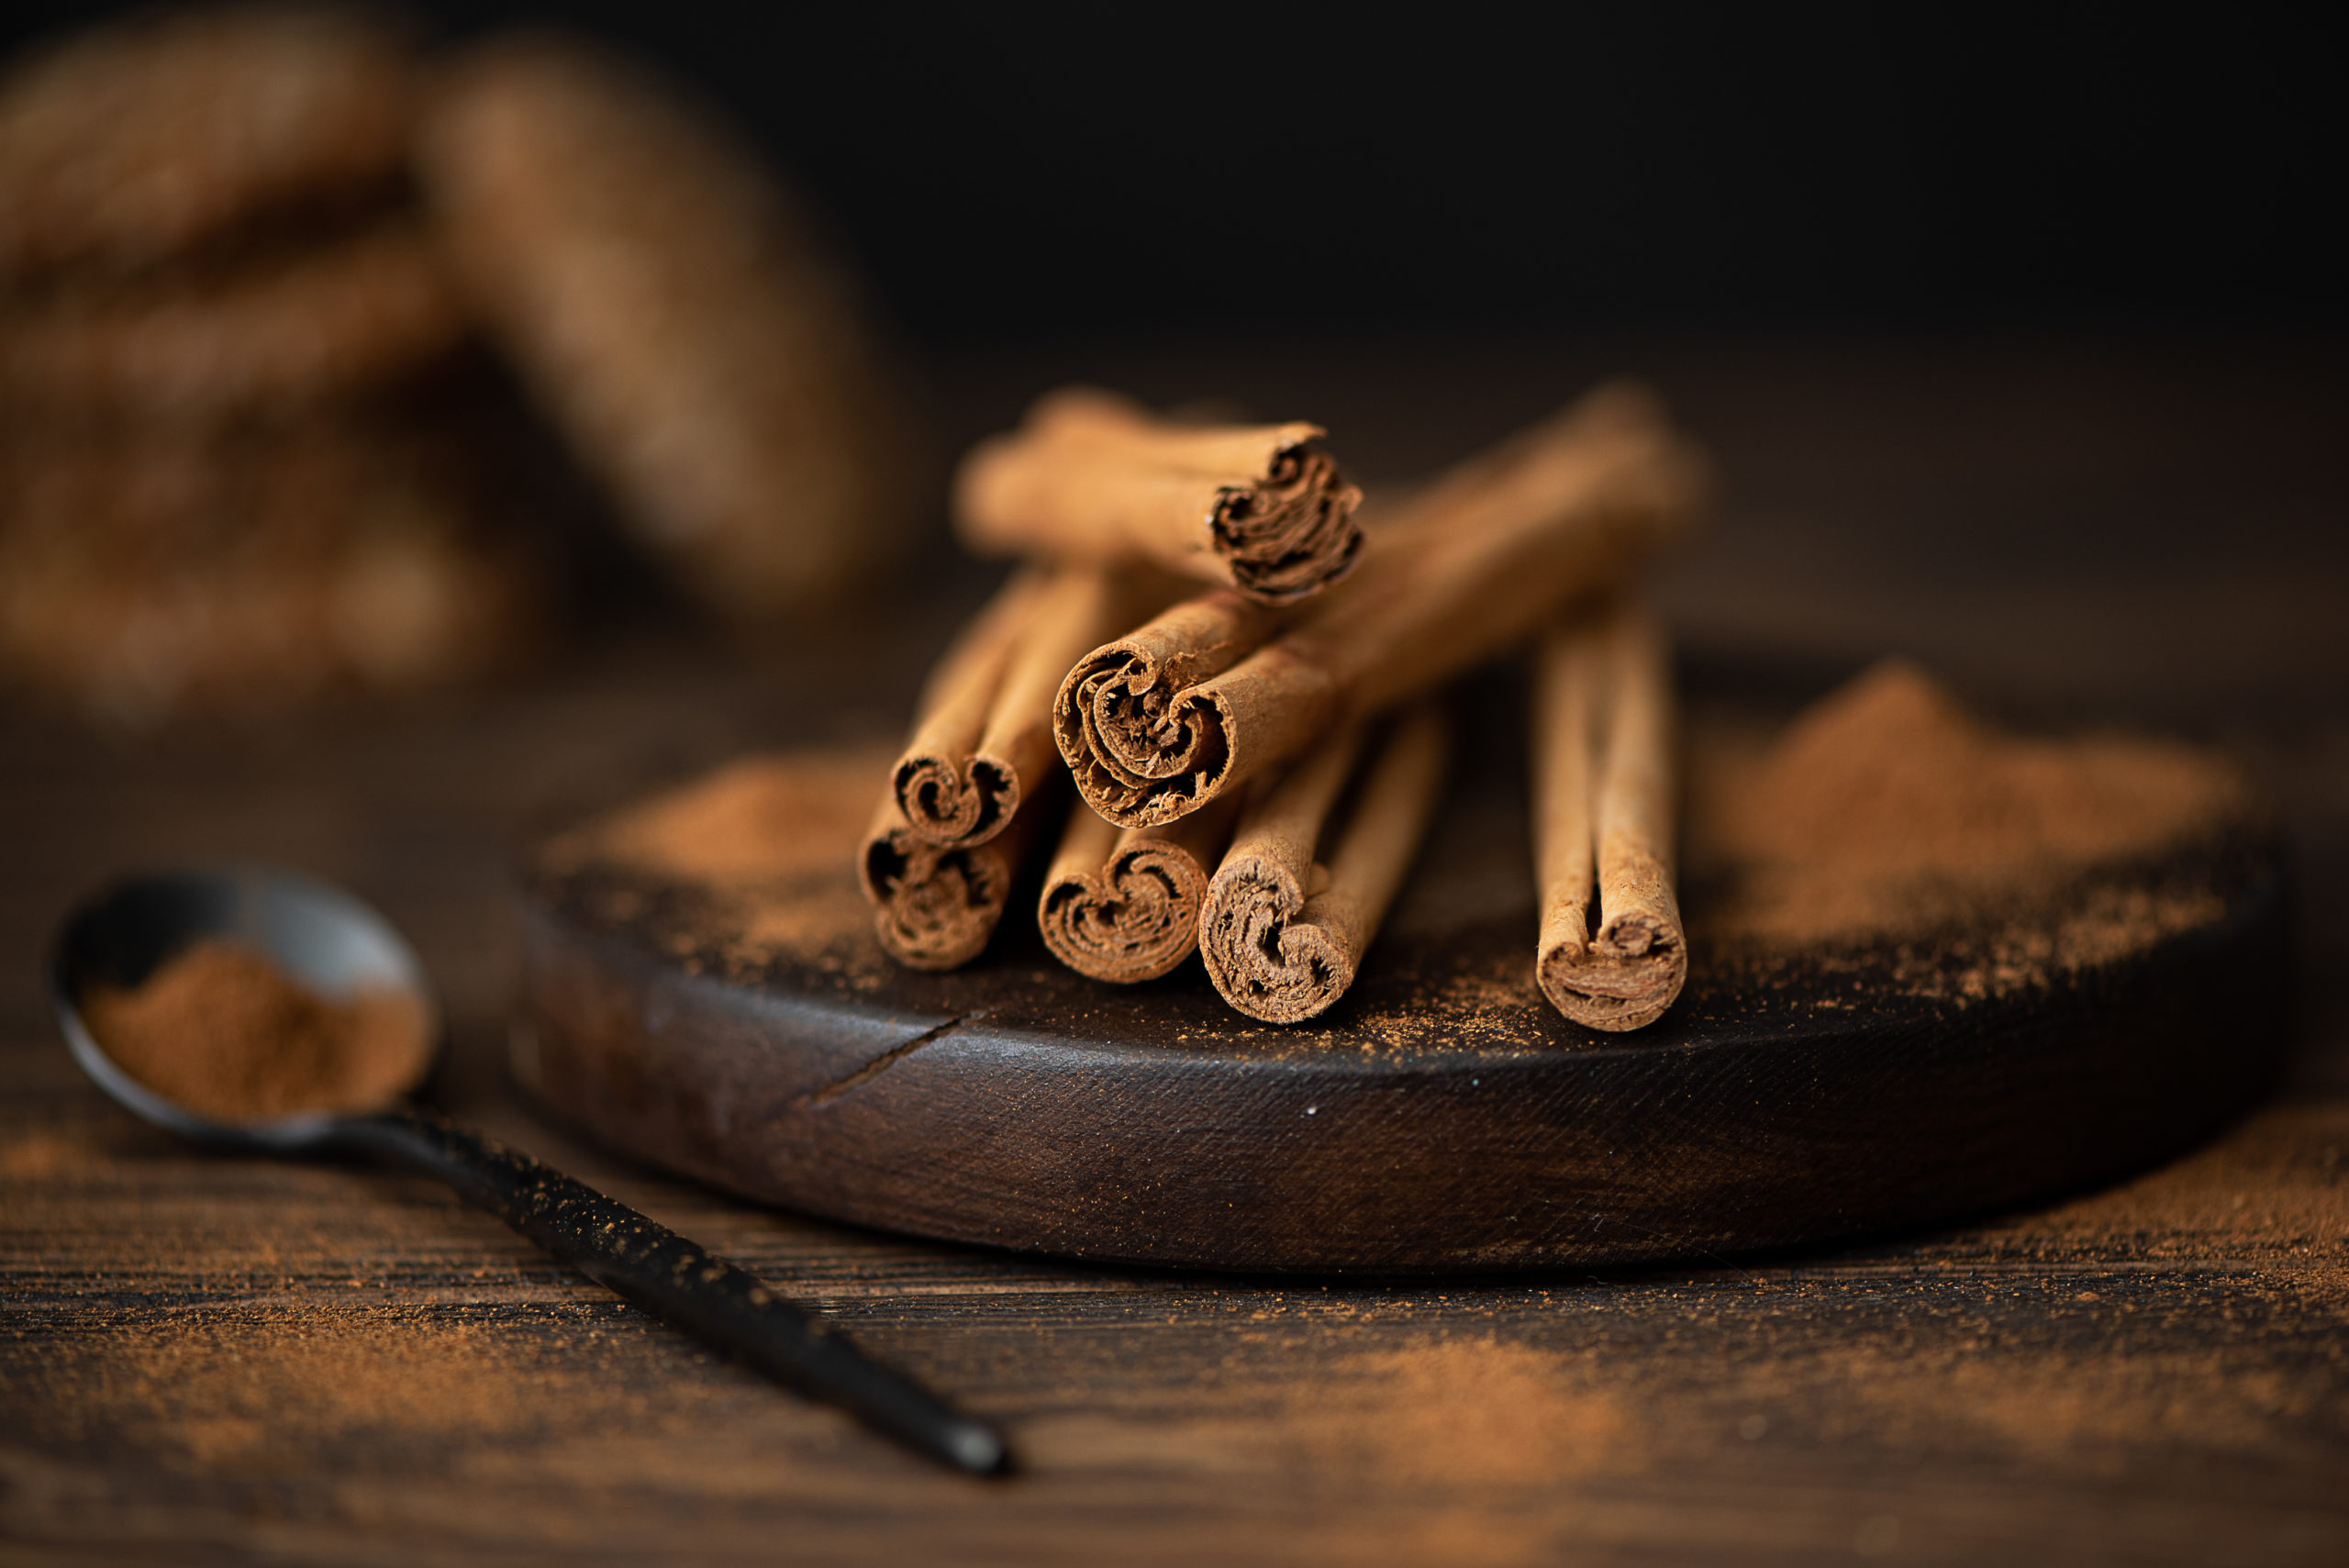 Cinnamon benefits - Maya Feller Nutrition